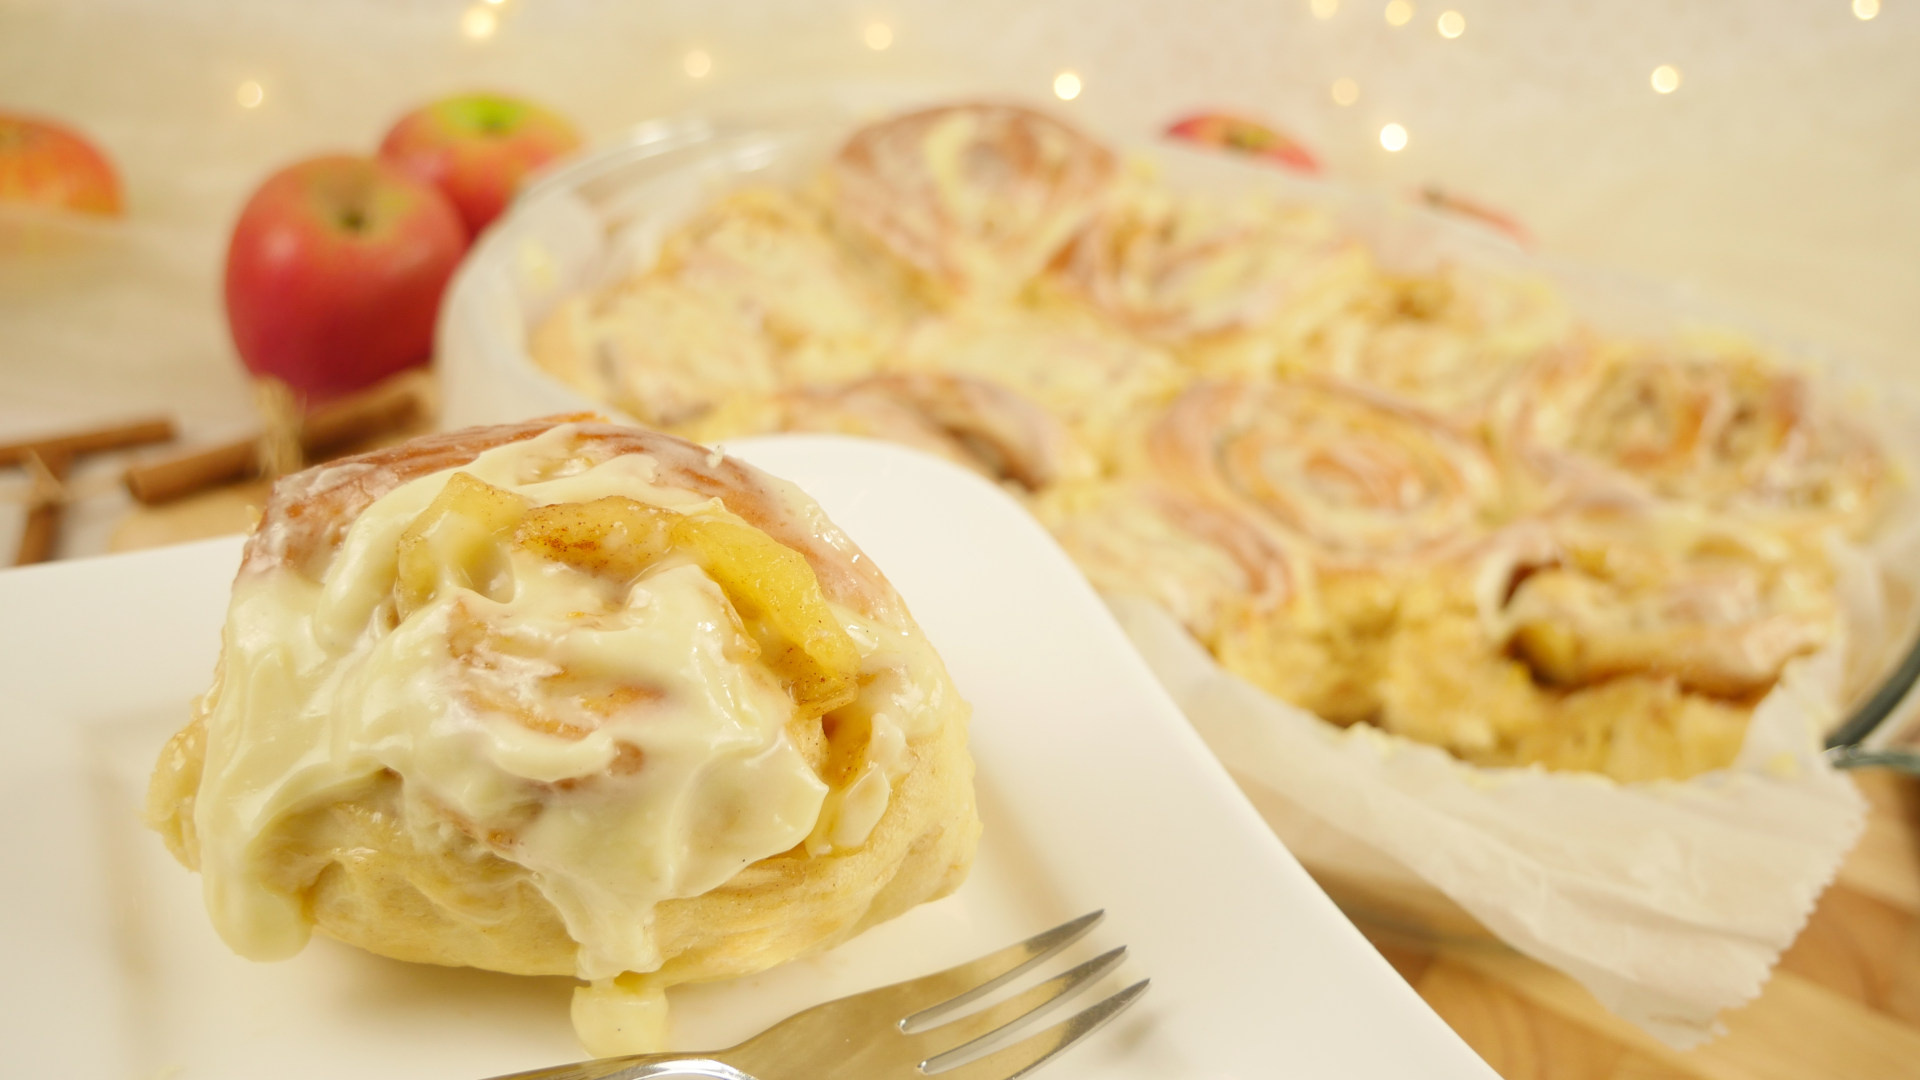 Cinnamon roll: A beloved pastry in American households, Apple pie. 1920x1080 Full HD Wallpaper.